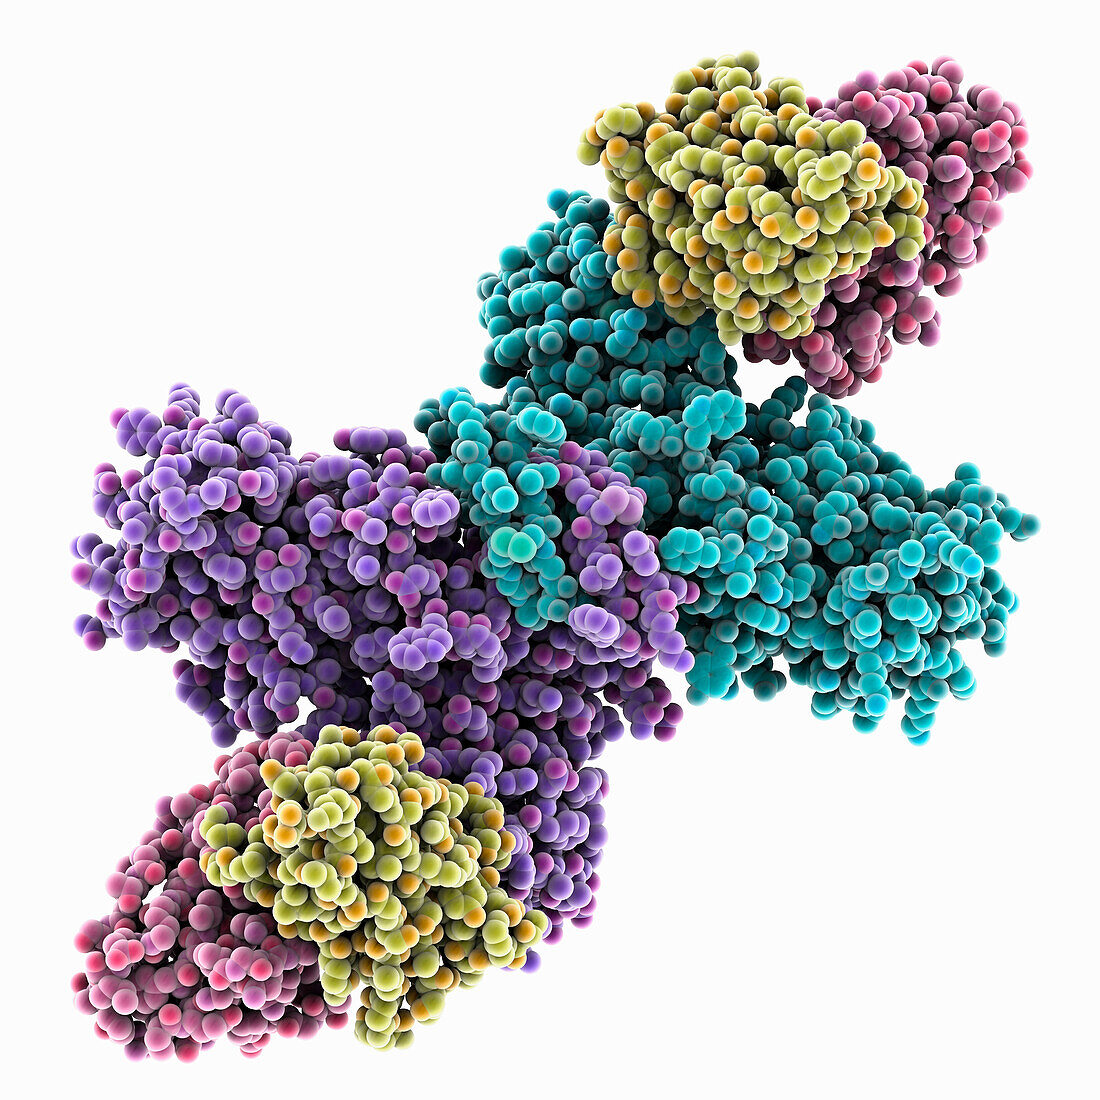 Dengue virus NS1 protein complex, illustration